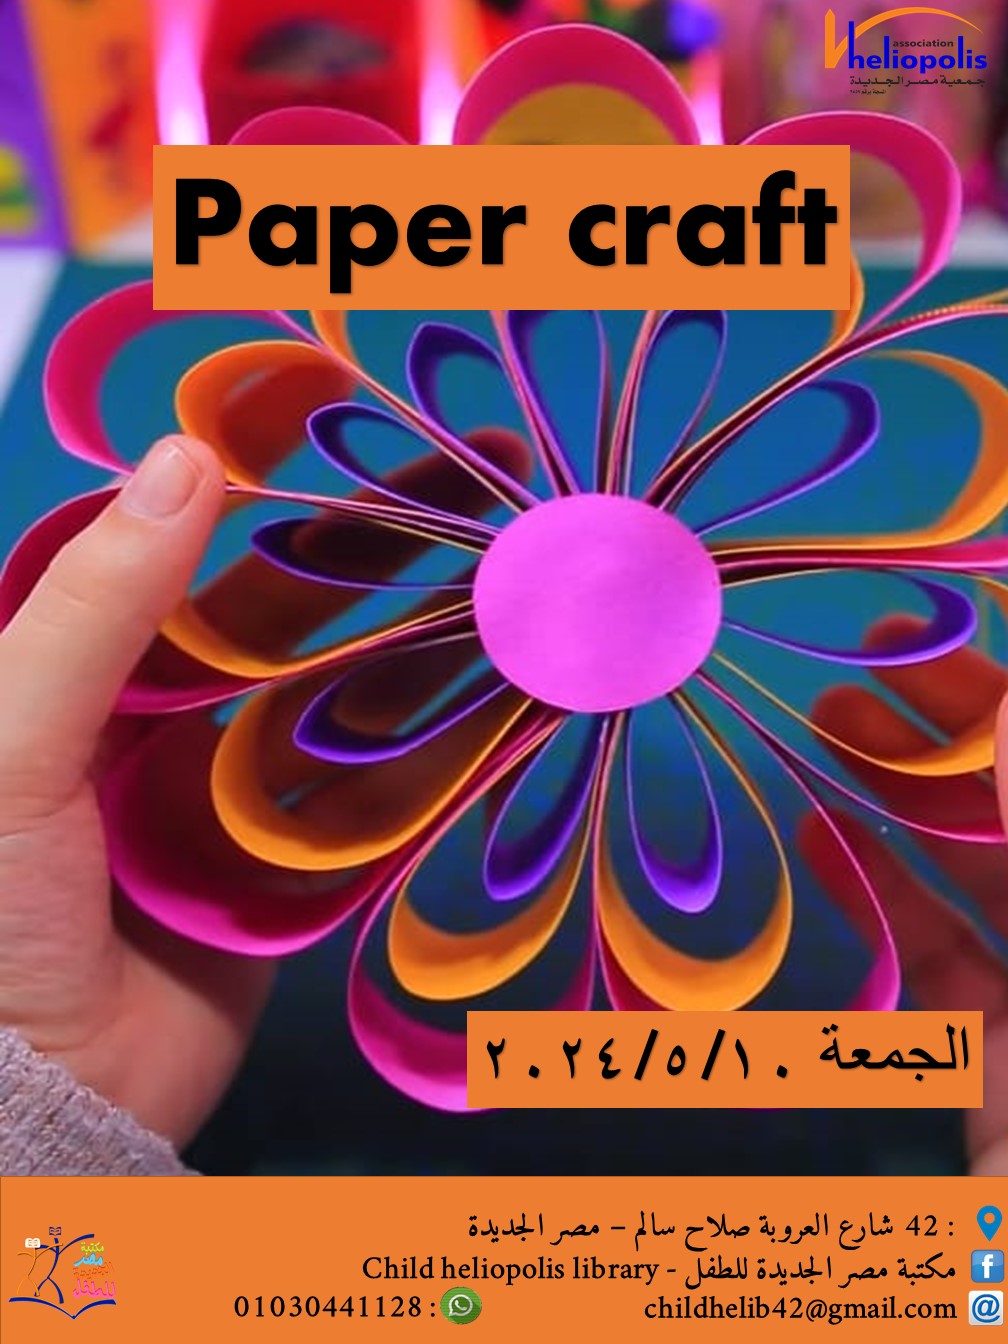 ورشة Paper craft